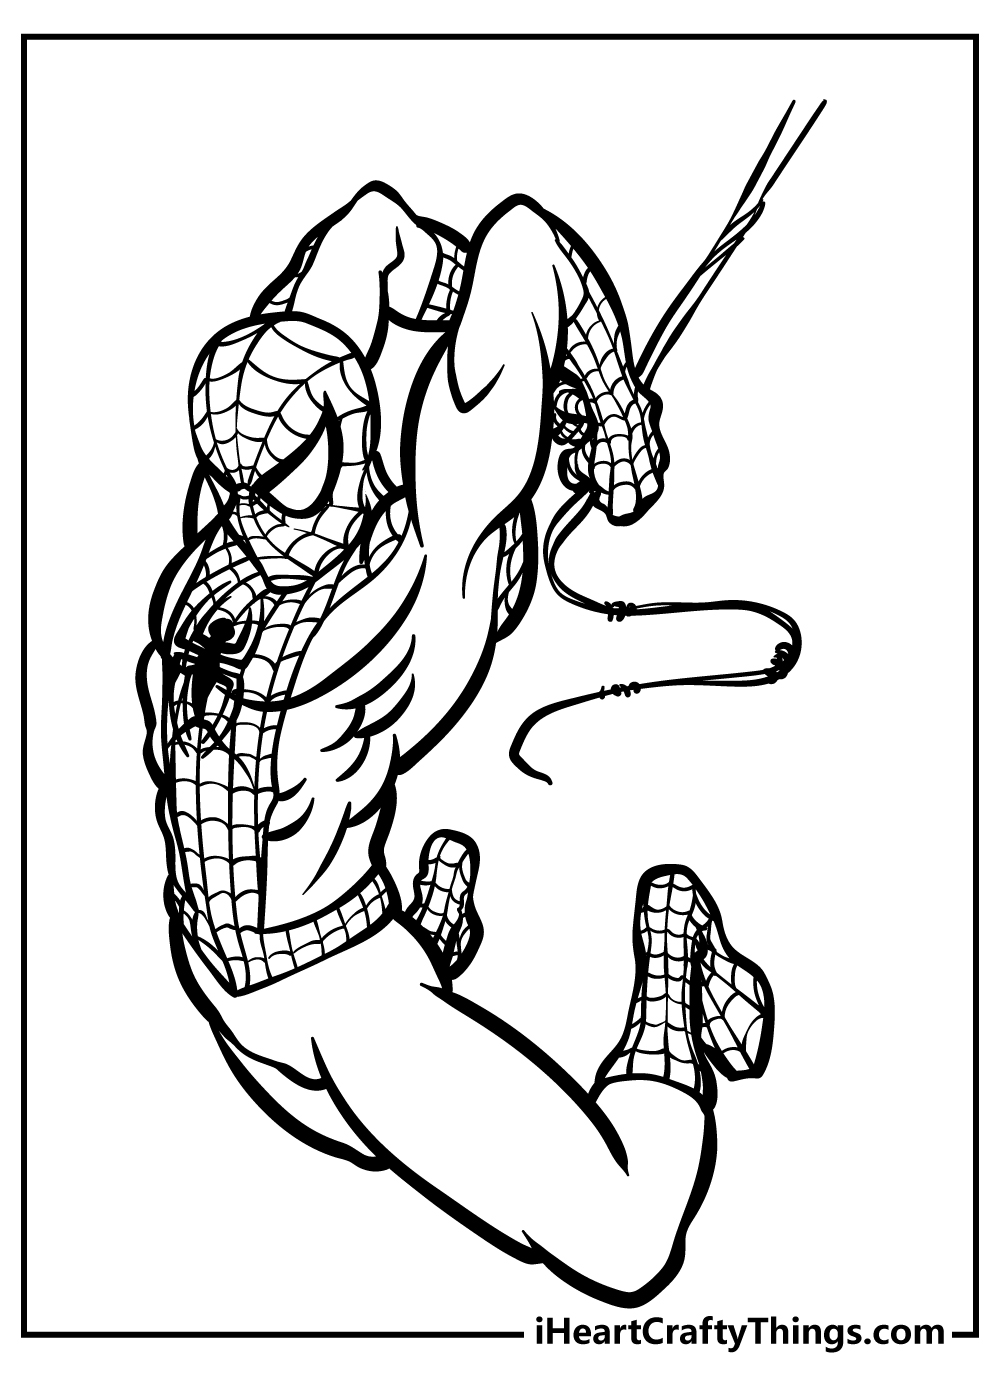 Spider-Man Coloring Book free printable